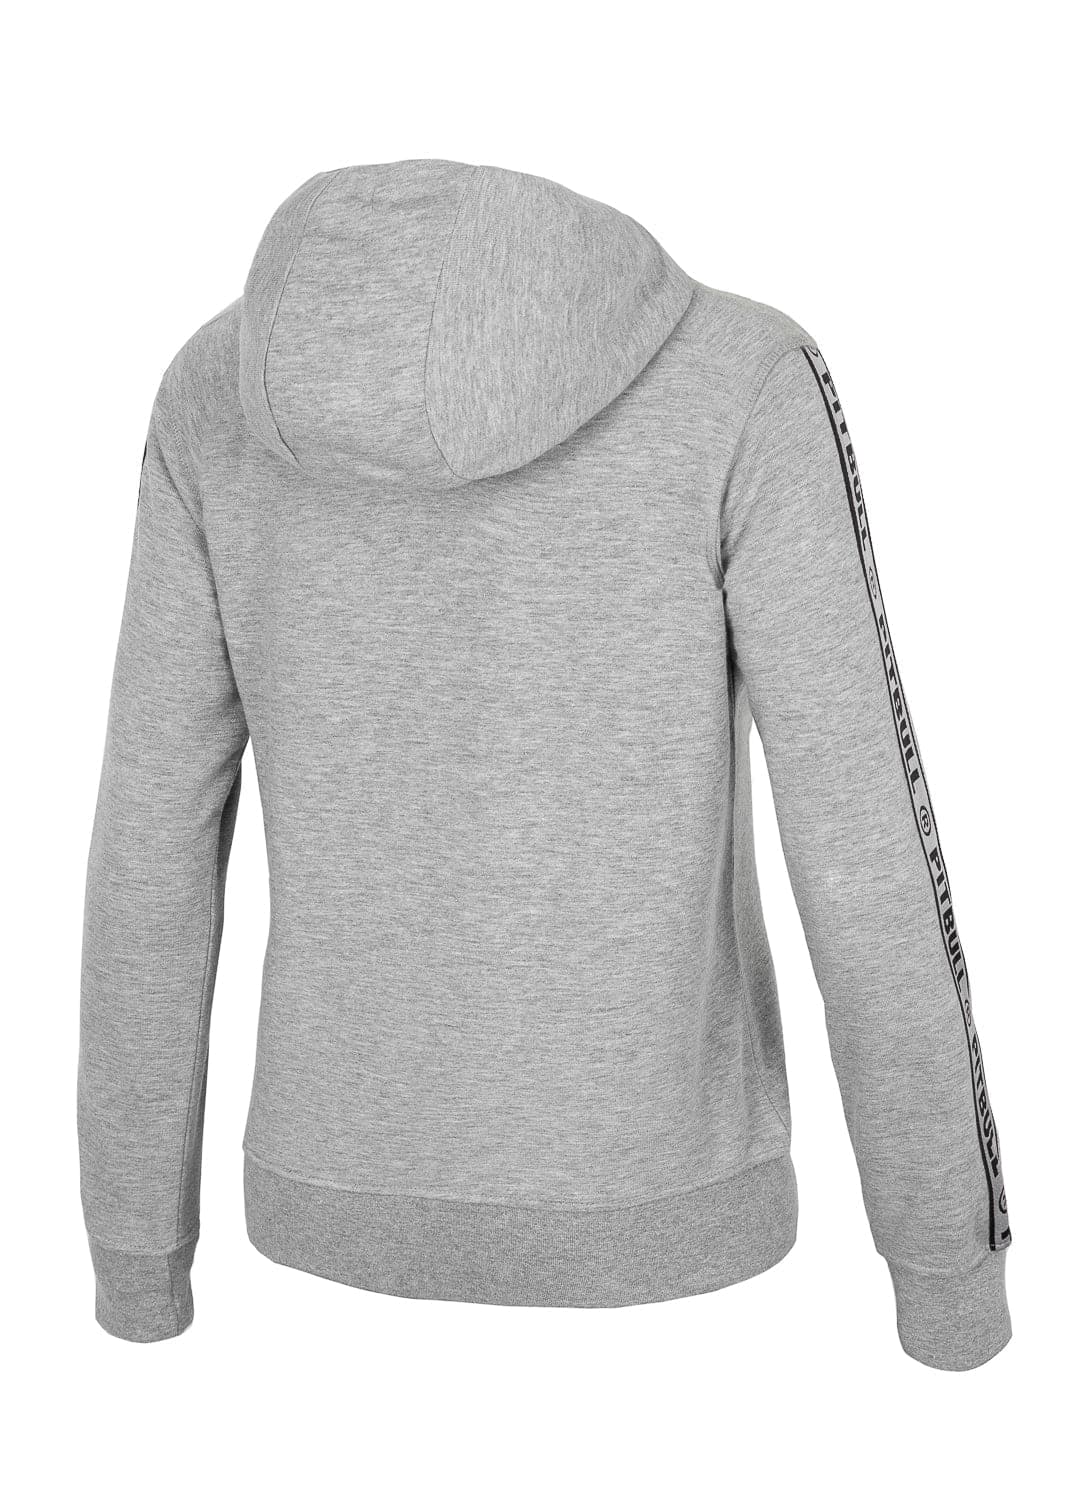 Women&#39;s hooded zip GWEN Grey - Pitbull West Coast International Store 